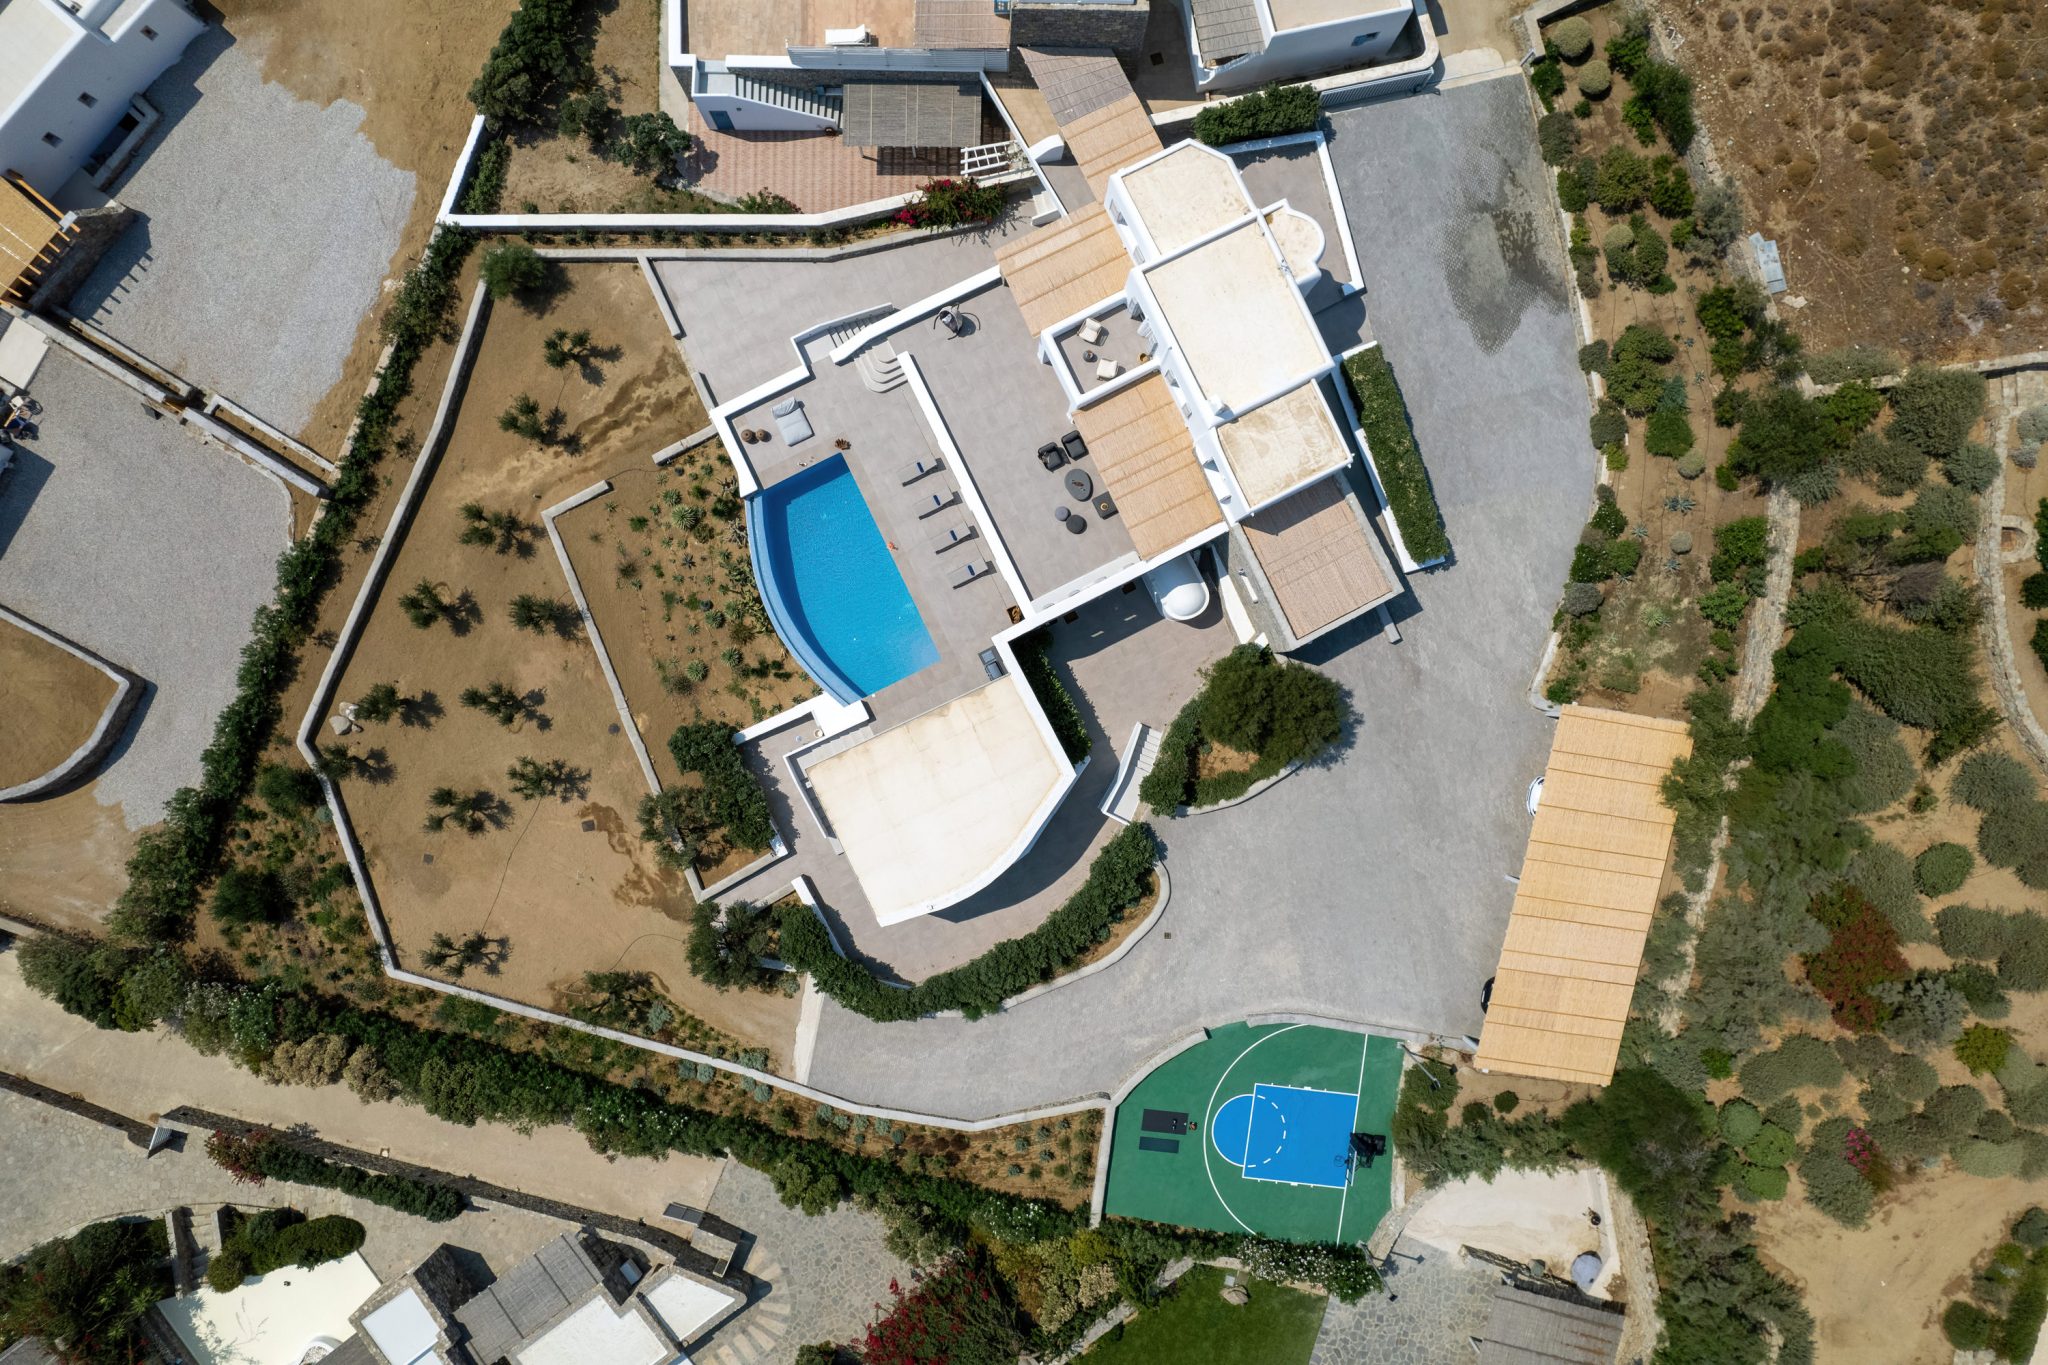 Villa Hacienda in Kalafatis-mykonos available for rent by Presidence